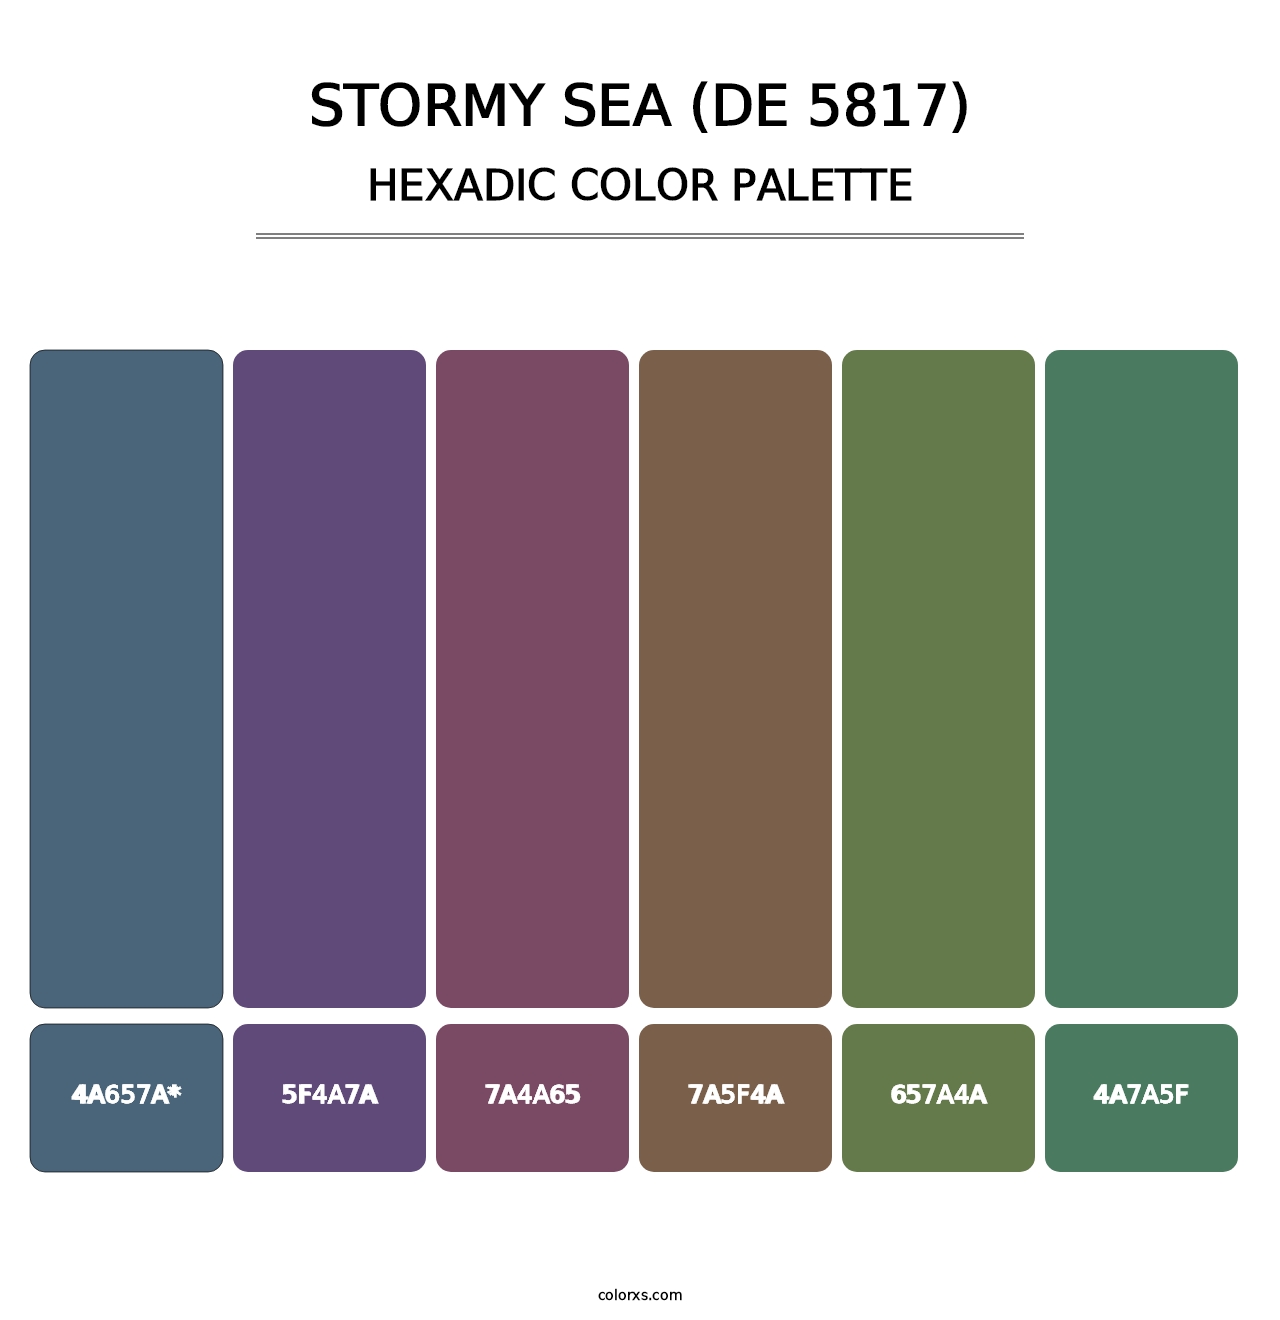 Stormy Sea (DE 5817) - Hexadic Color Palette